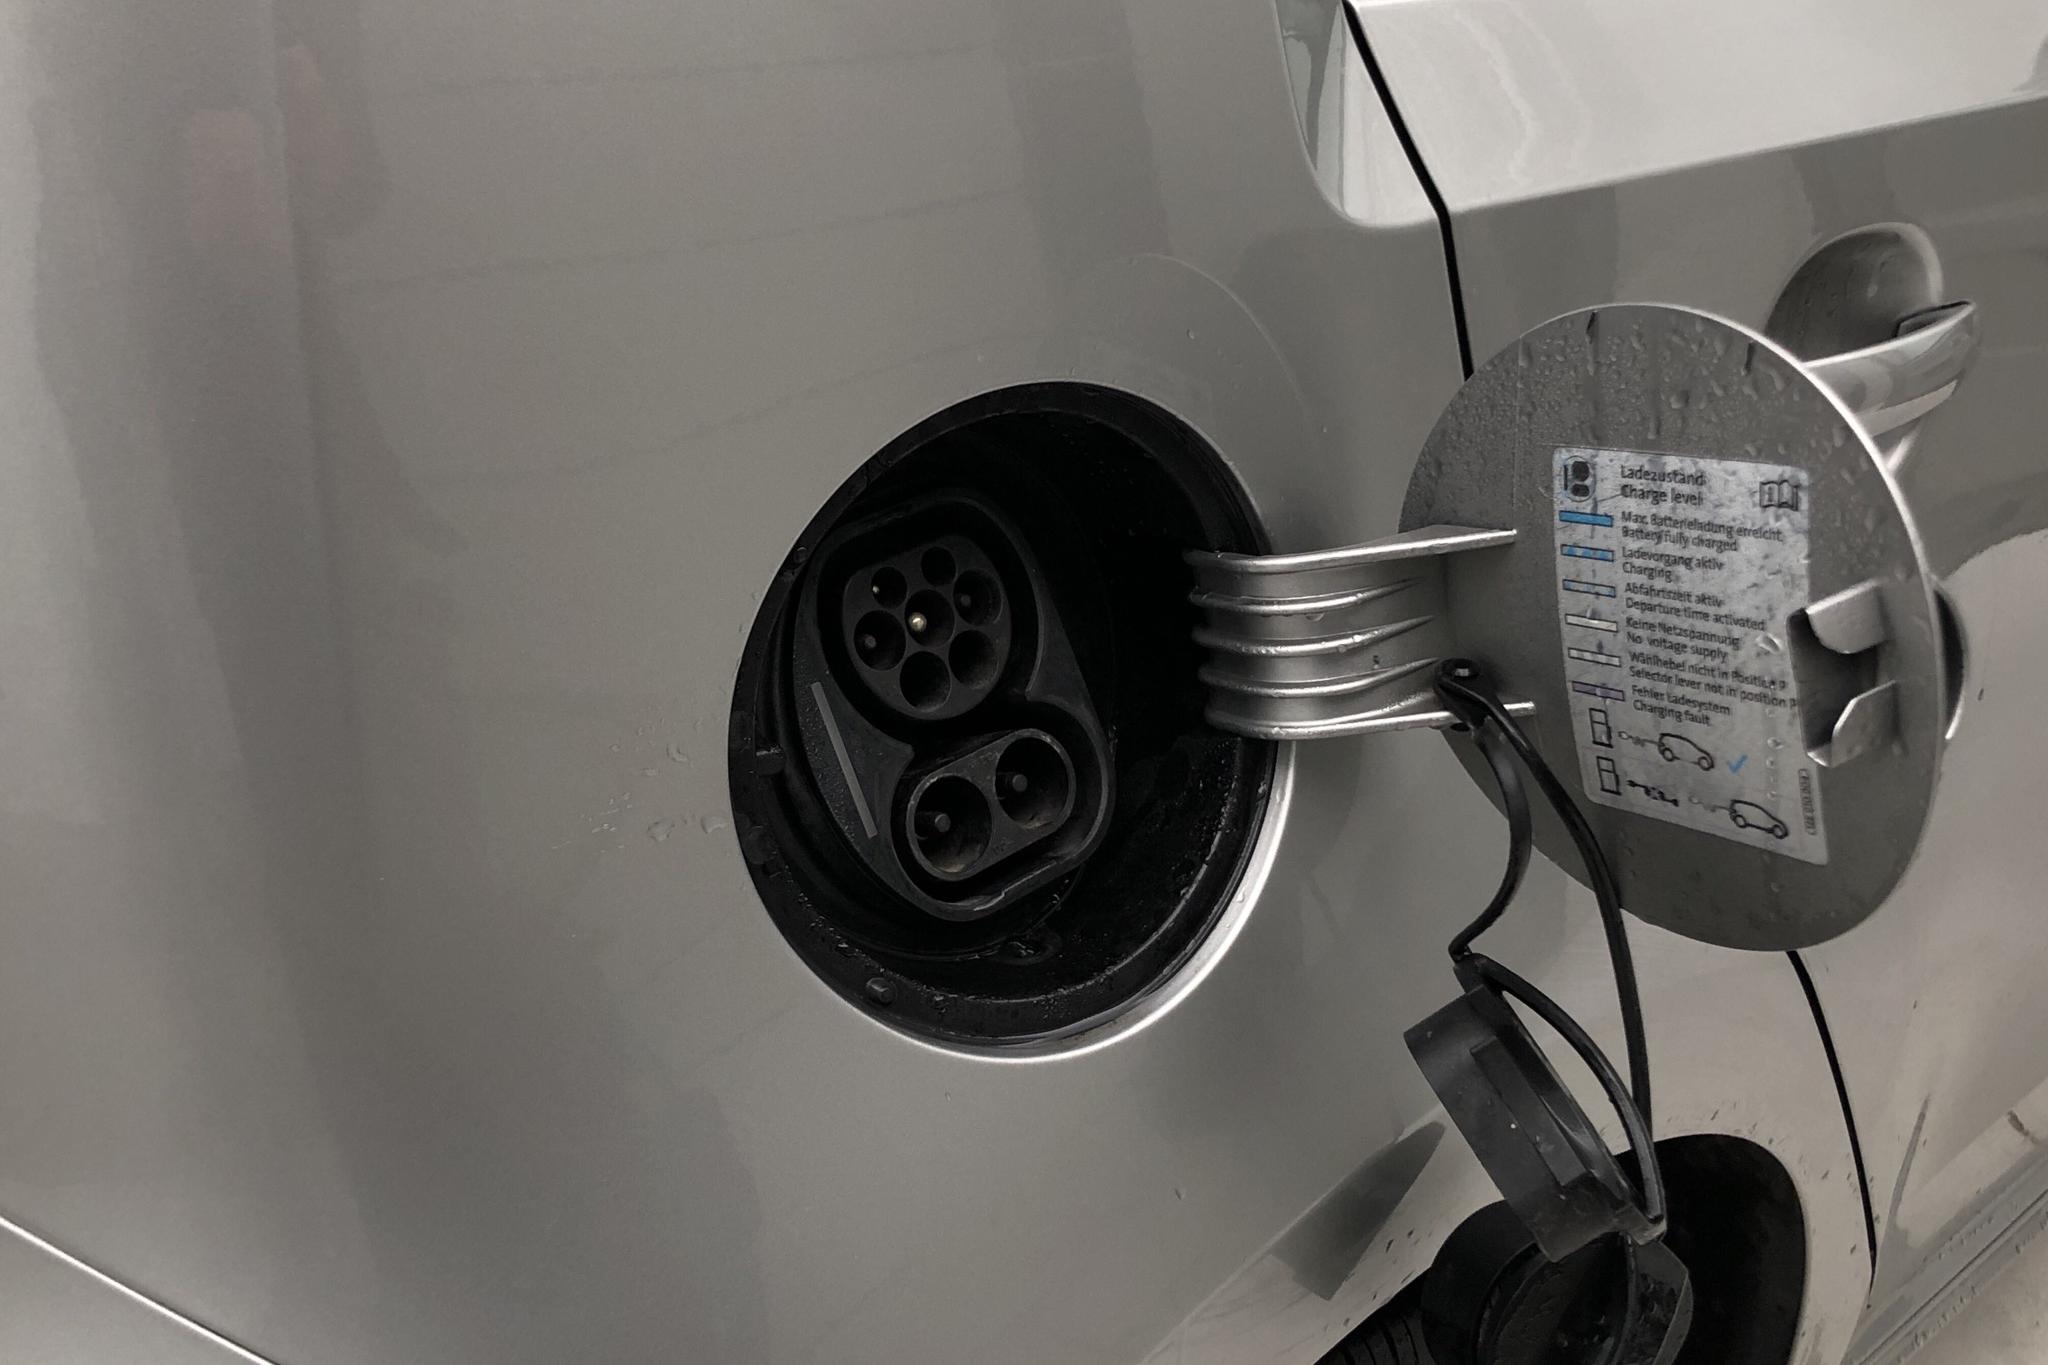 VW e-up! (82hk) - 95 340 km - Automatic - silver - 2015